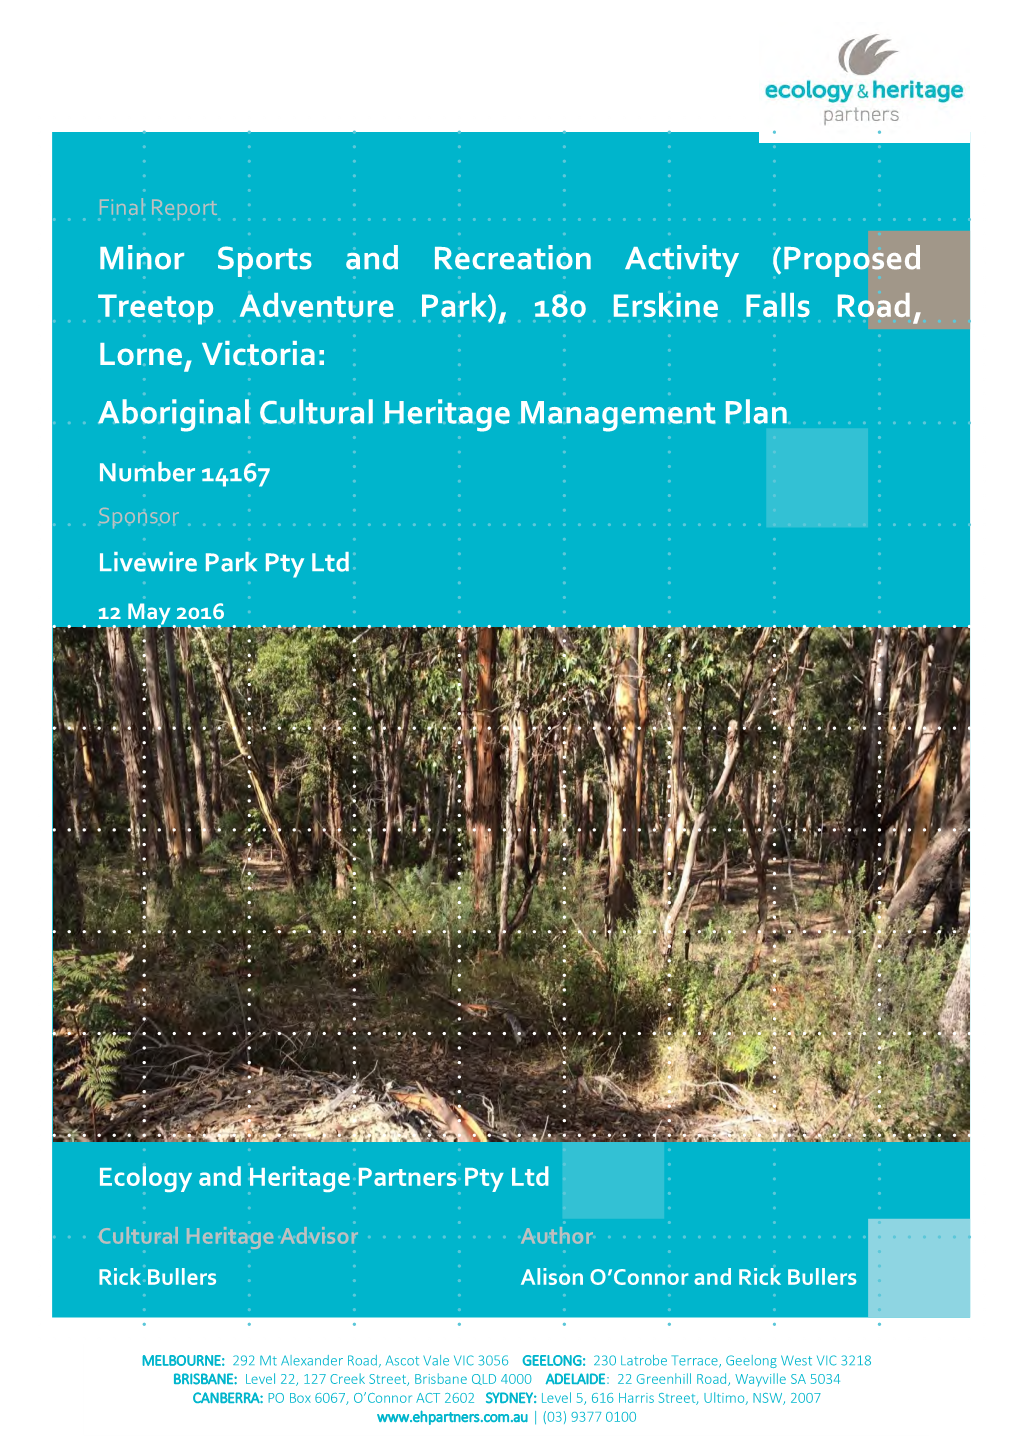 180 Erskine Falls Road, Lorne, Victoria: Aboriginal Cultural Heritage Management Plan